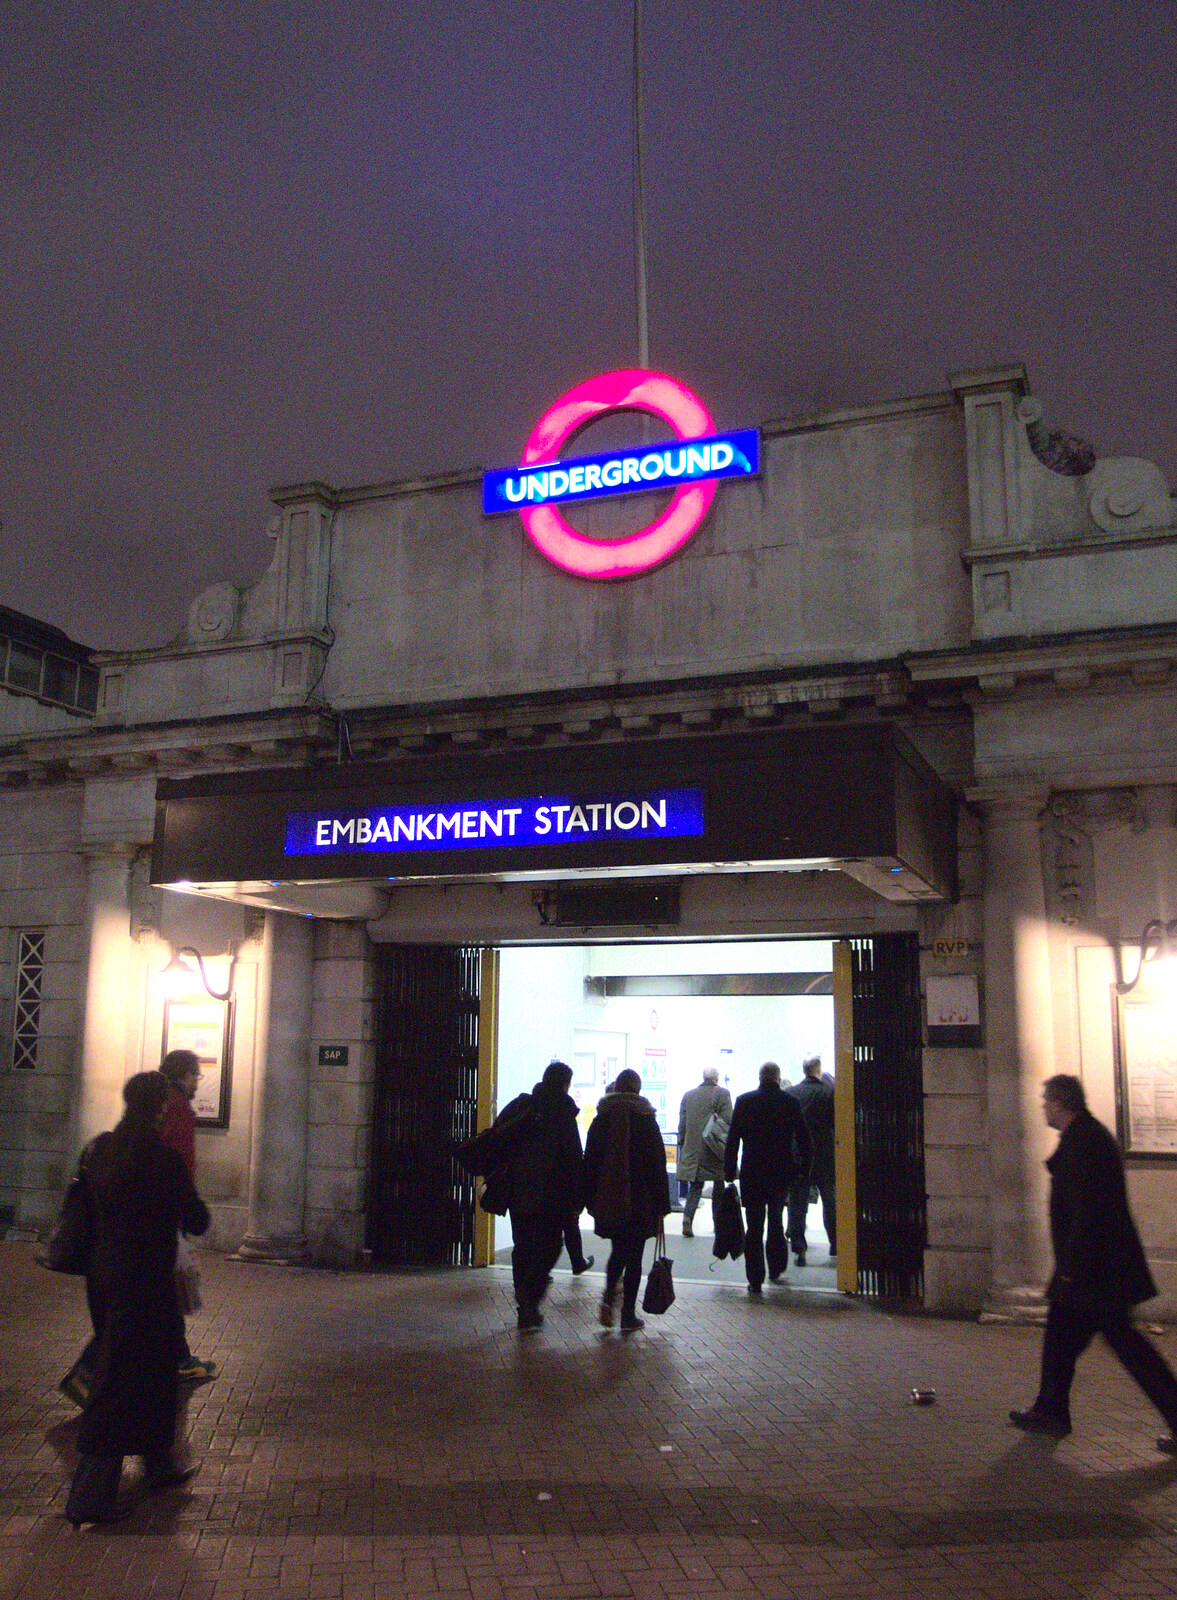 Embankment underground station from SwiftKey Innovation Nights, Westminster, London - 19th December 2014